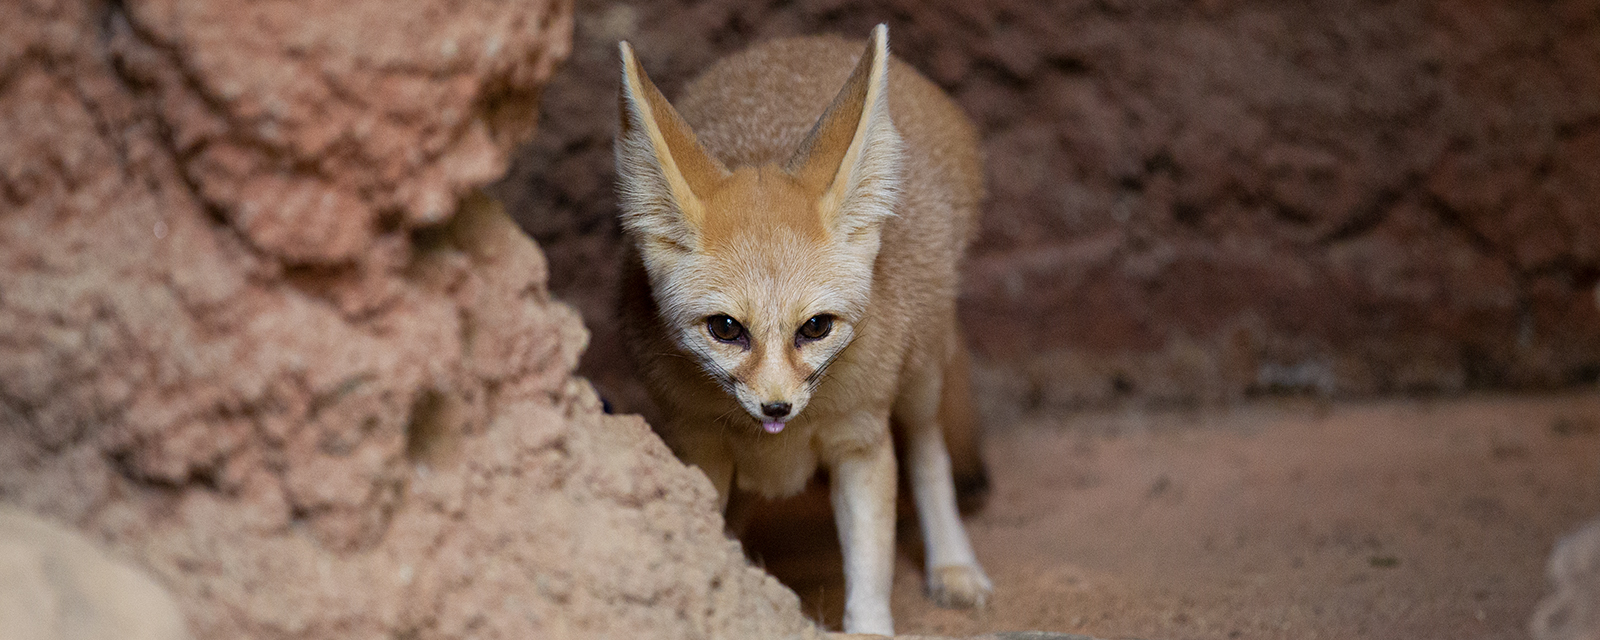 Fennec fox in exhibit